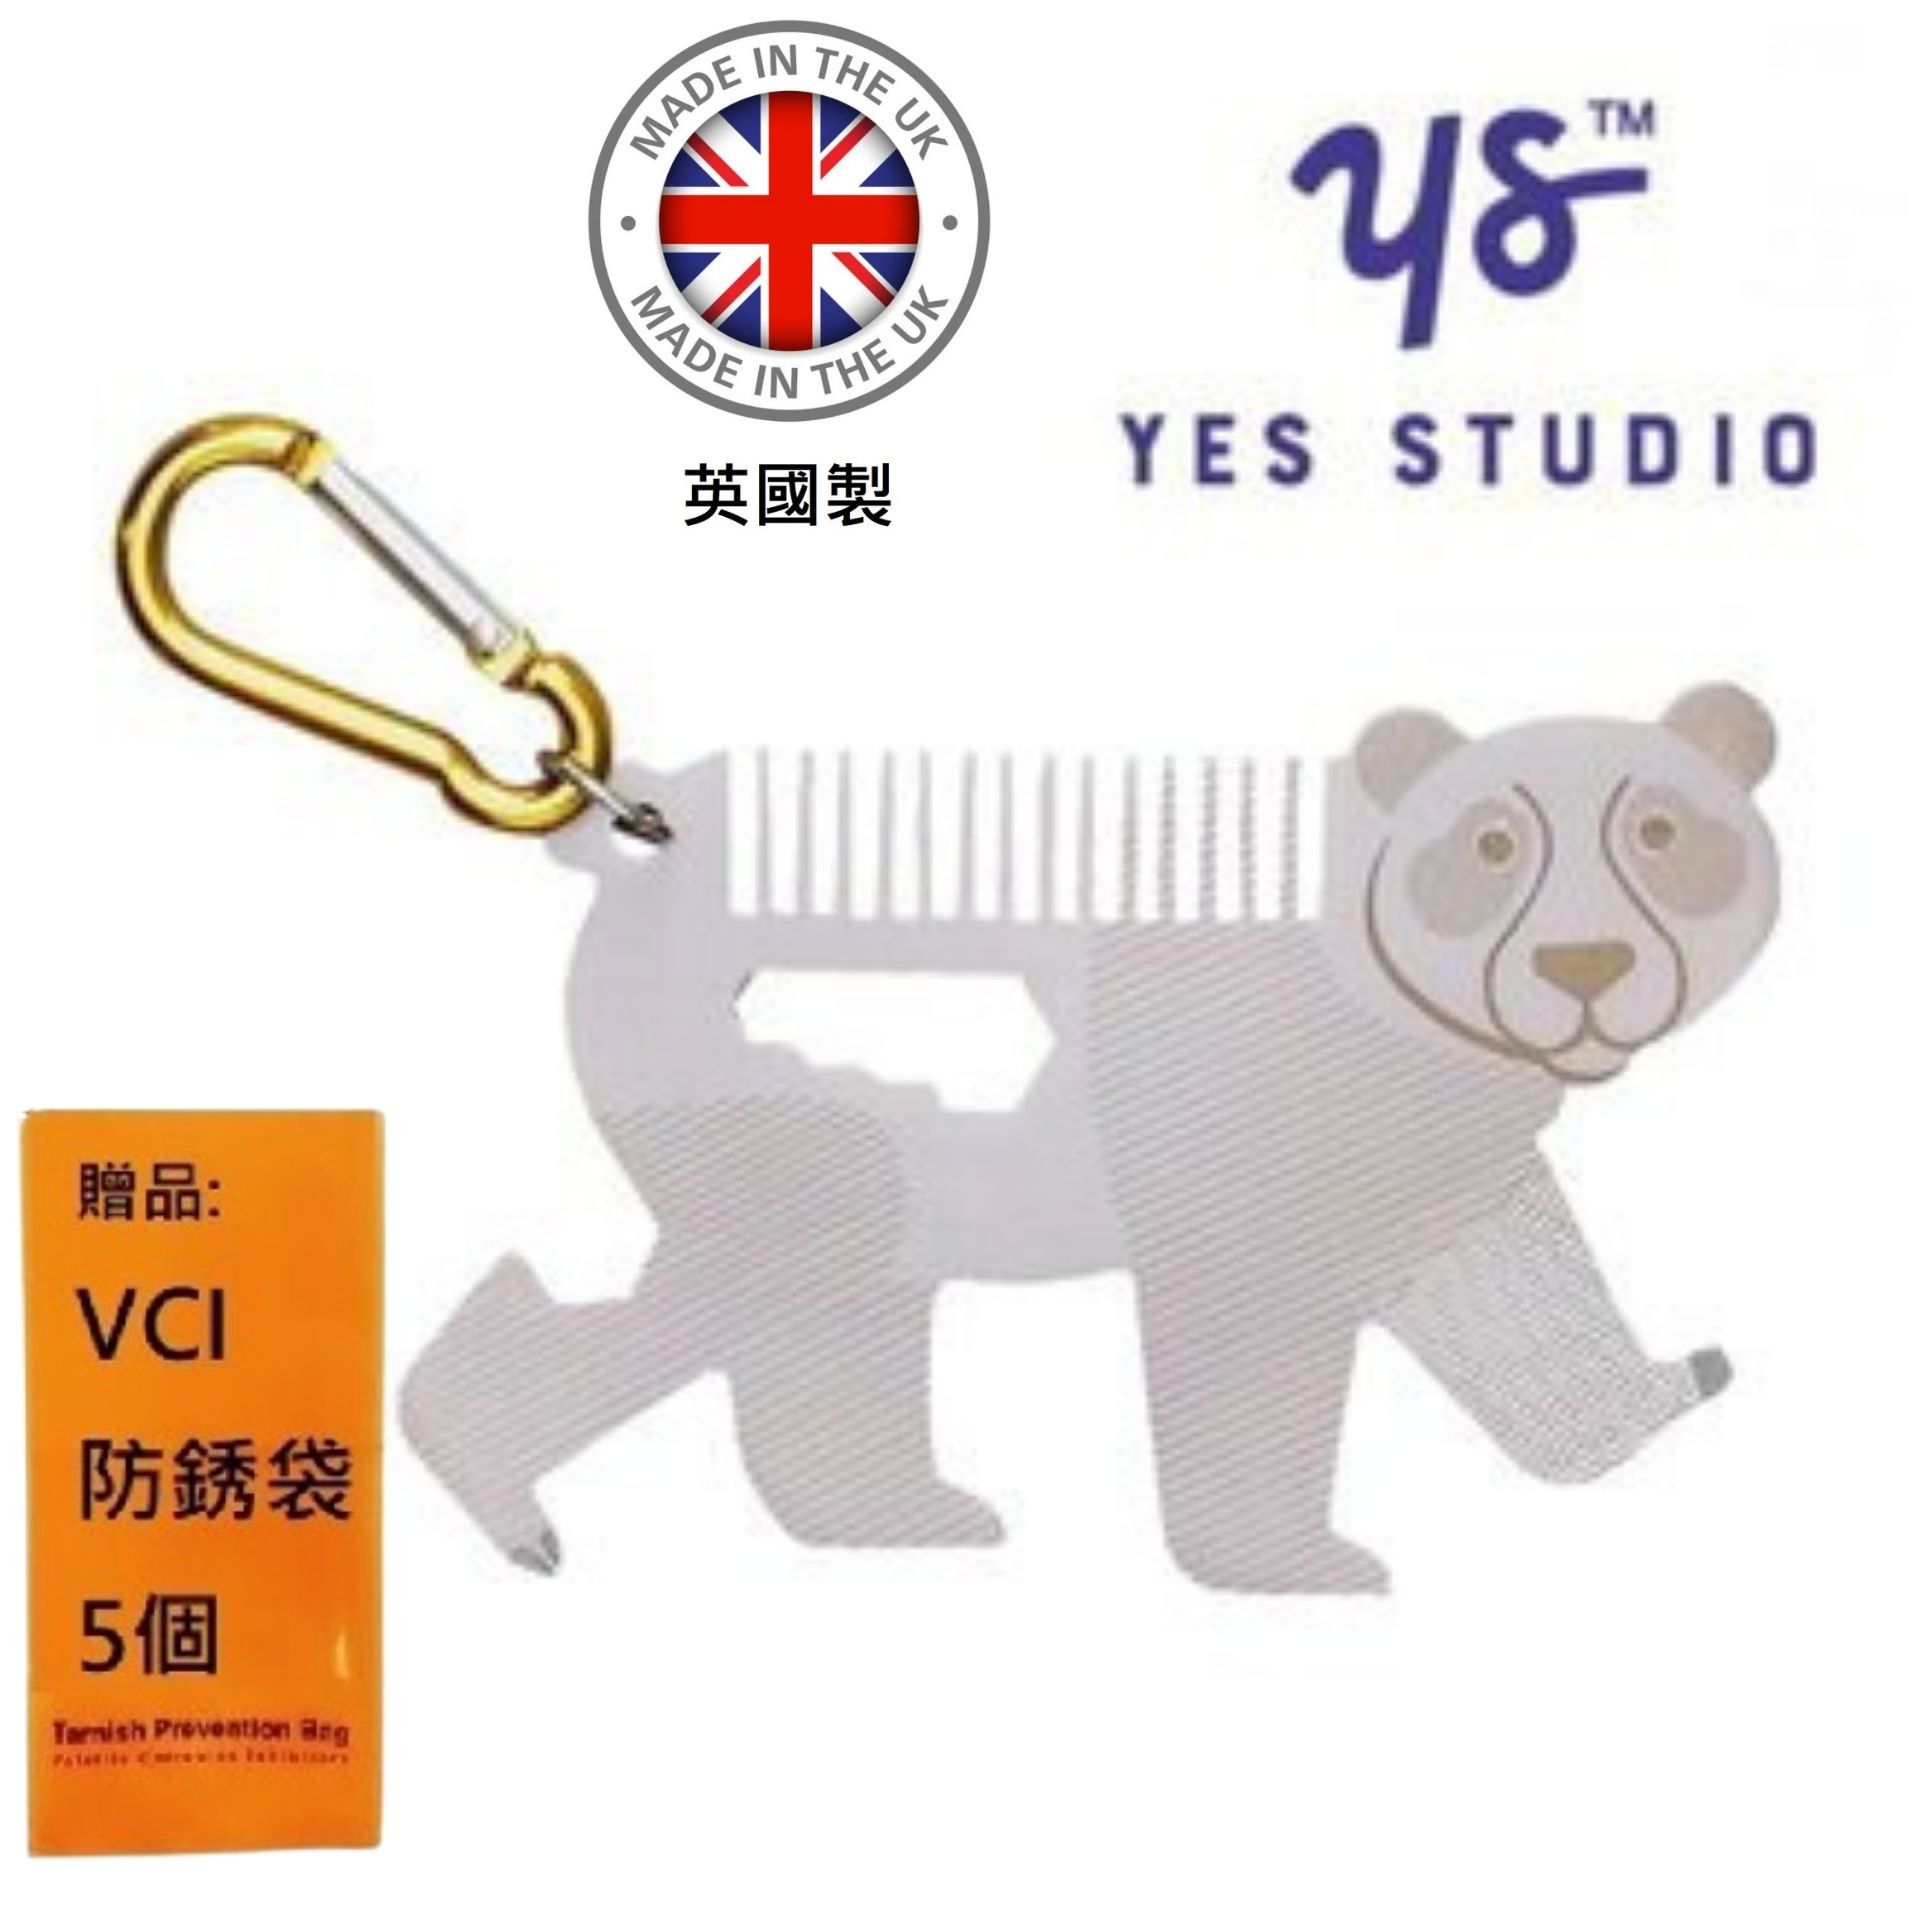 【YES STUDIO】7合1熊貓造型隨身工具卡 其酷炫的熊貓形狀提供了七種有用的功能